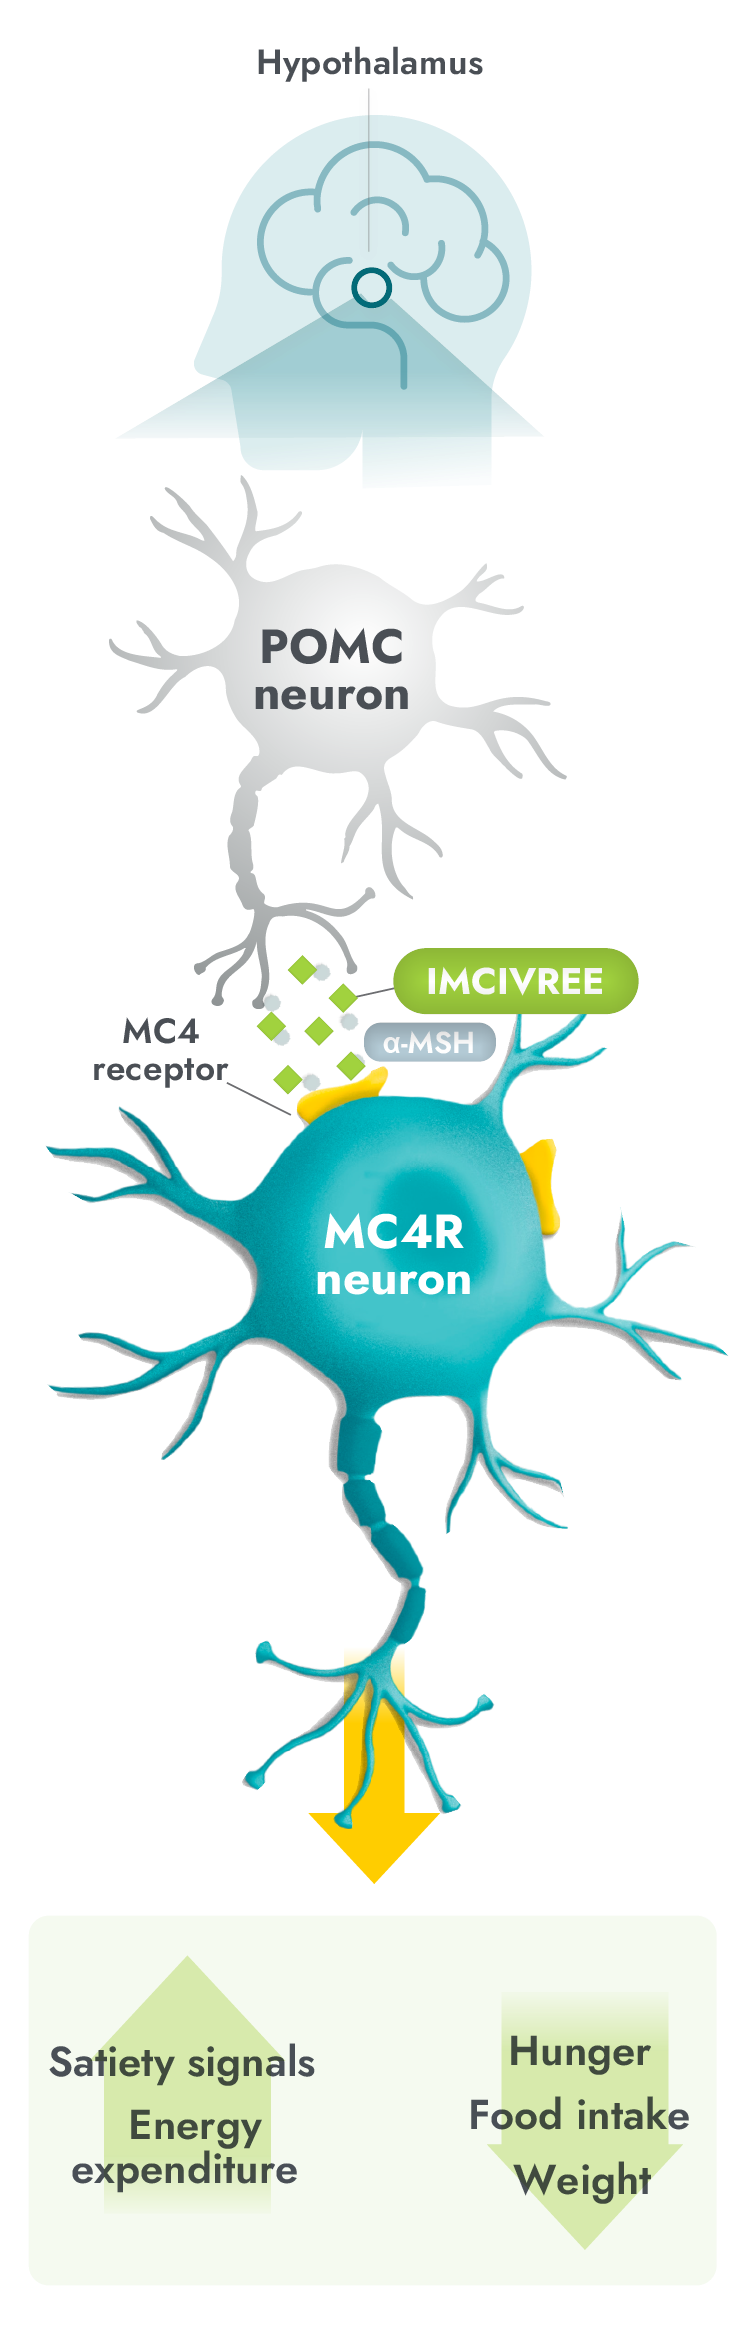 IMCIVREE activates the MC4 receptor in the MC4R pathway